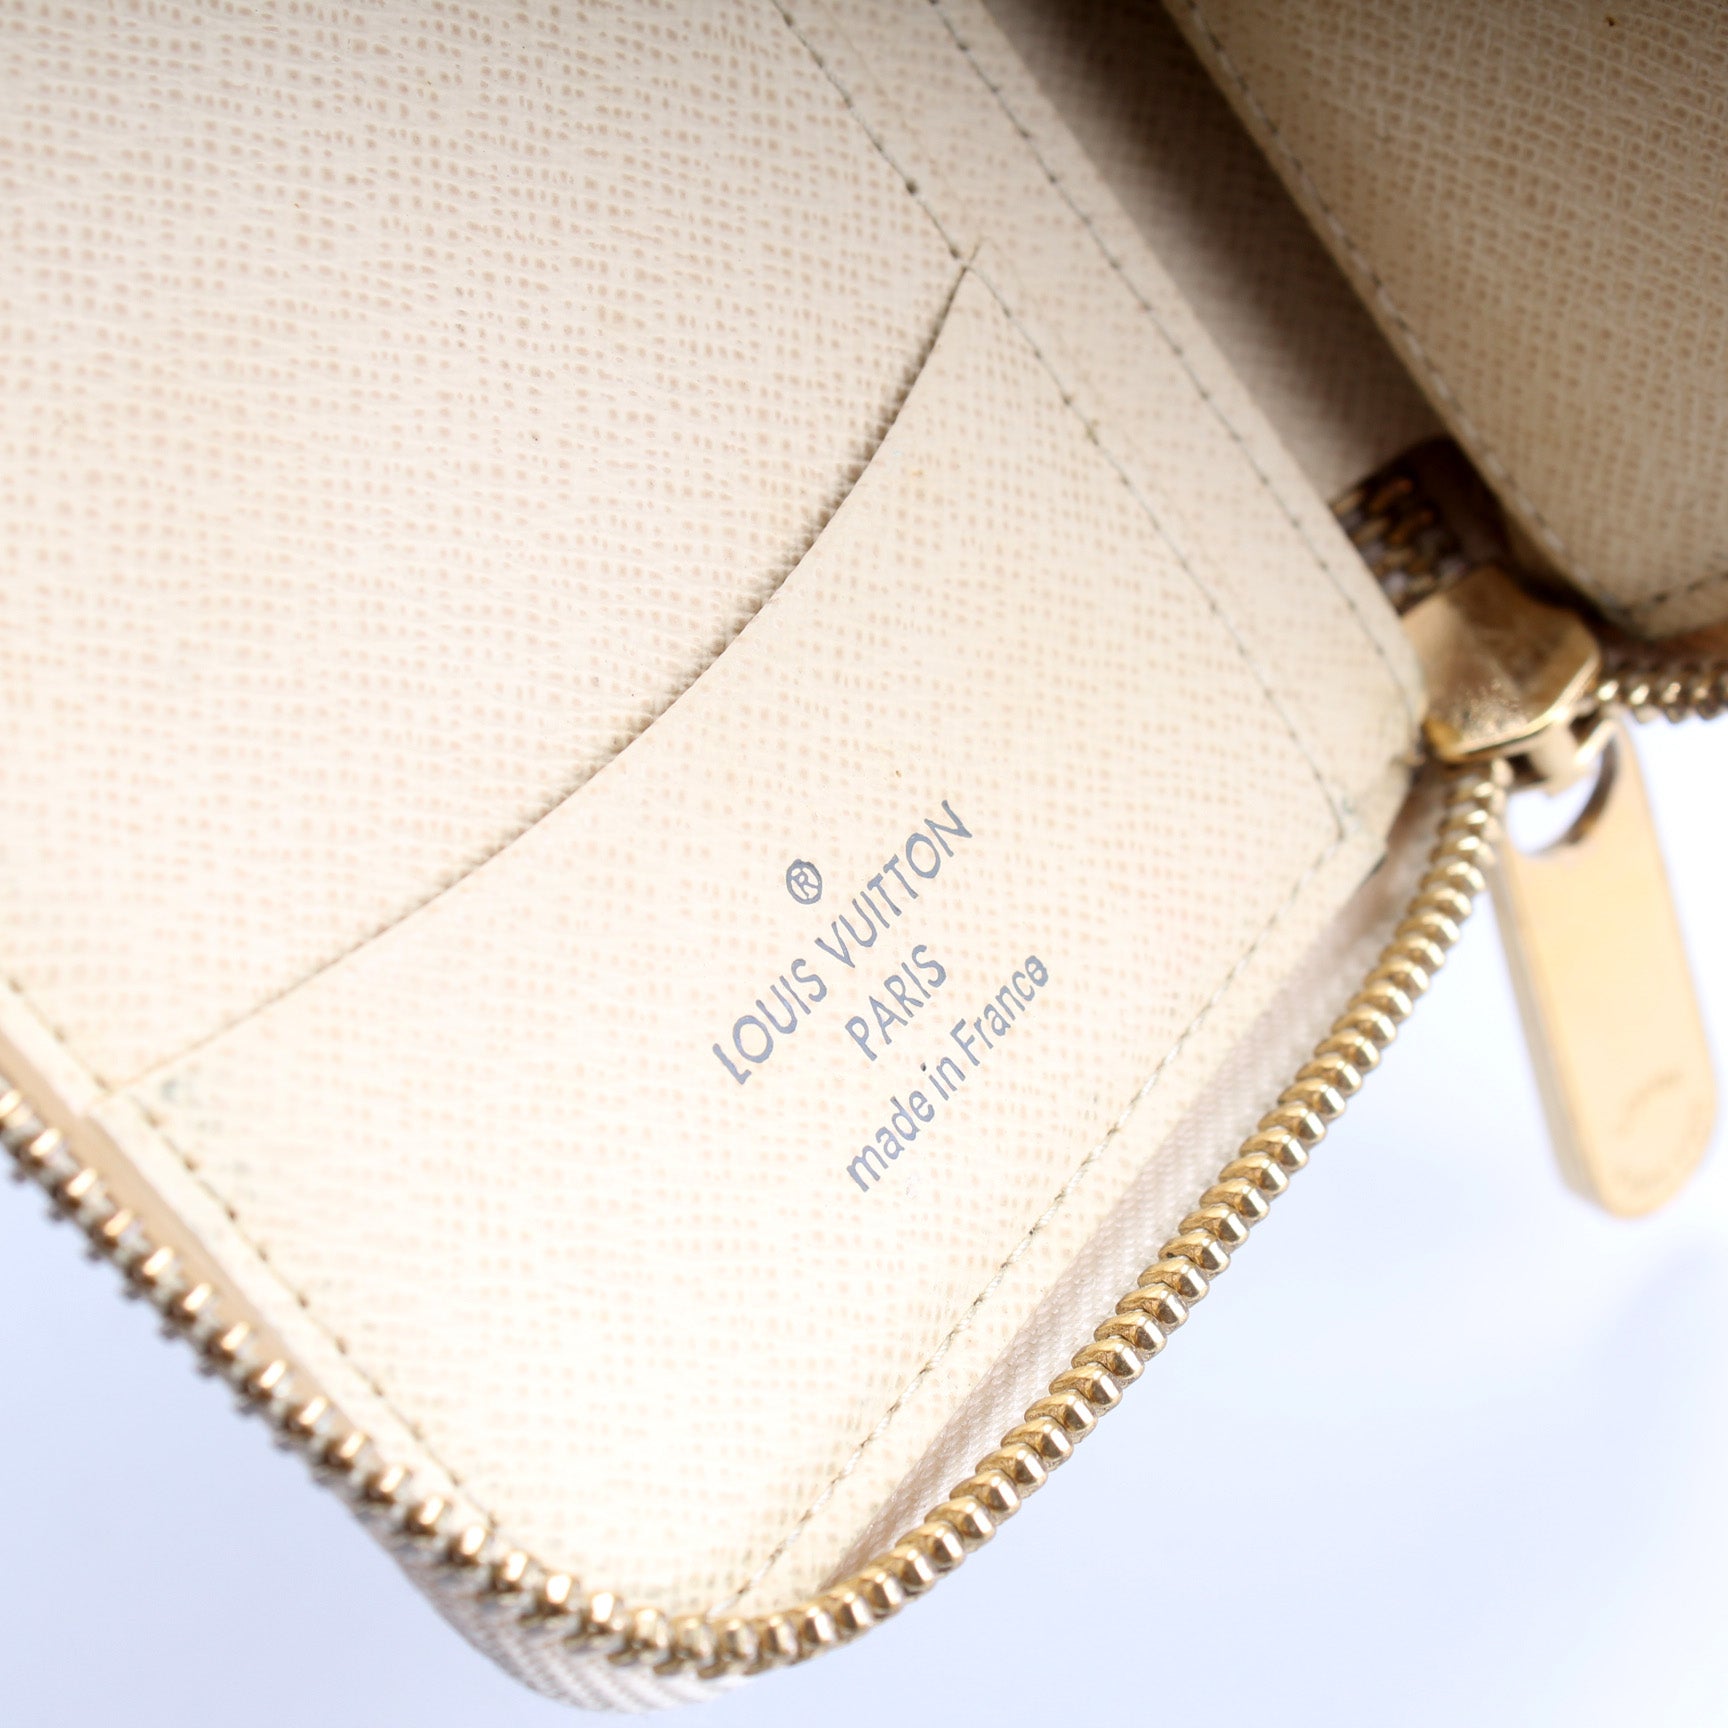 Louis Vuitton Zippy Compact Wallet In Damier Azur